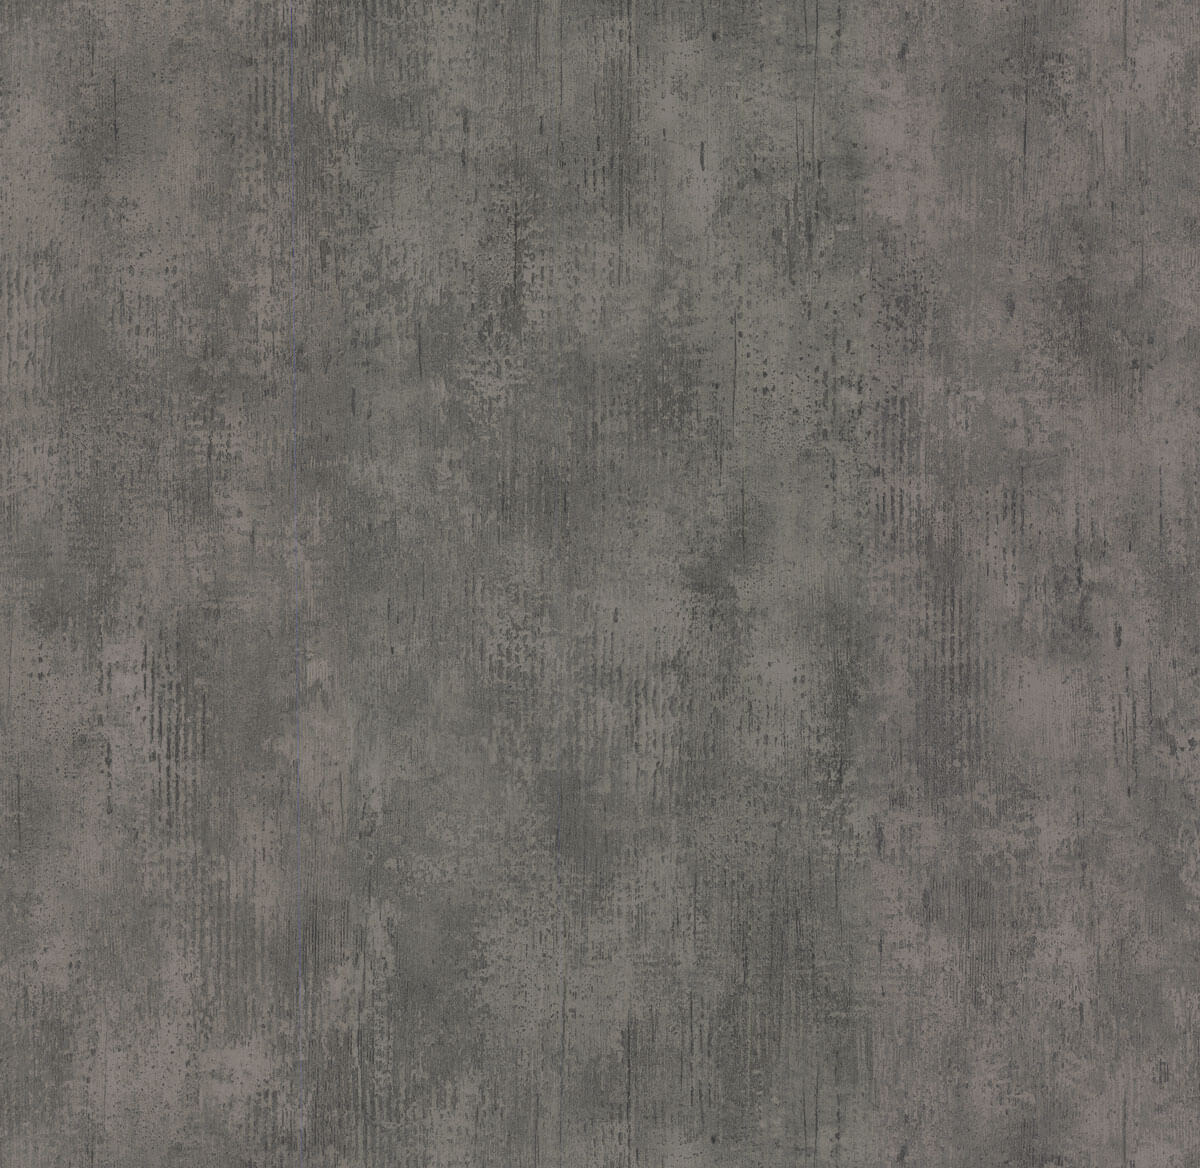 Urban Oasis Edifice Wallpaper - Charcoal Gray